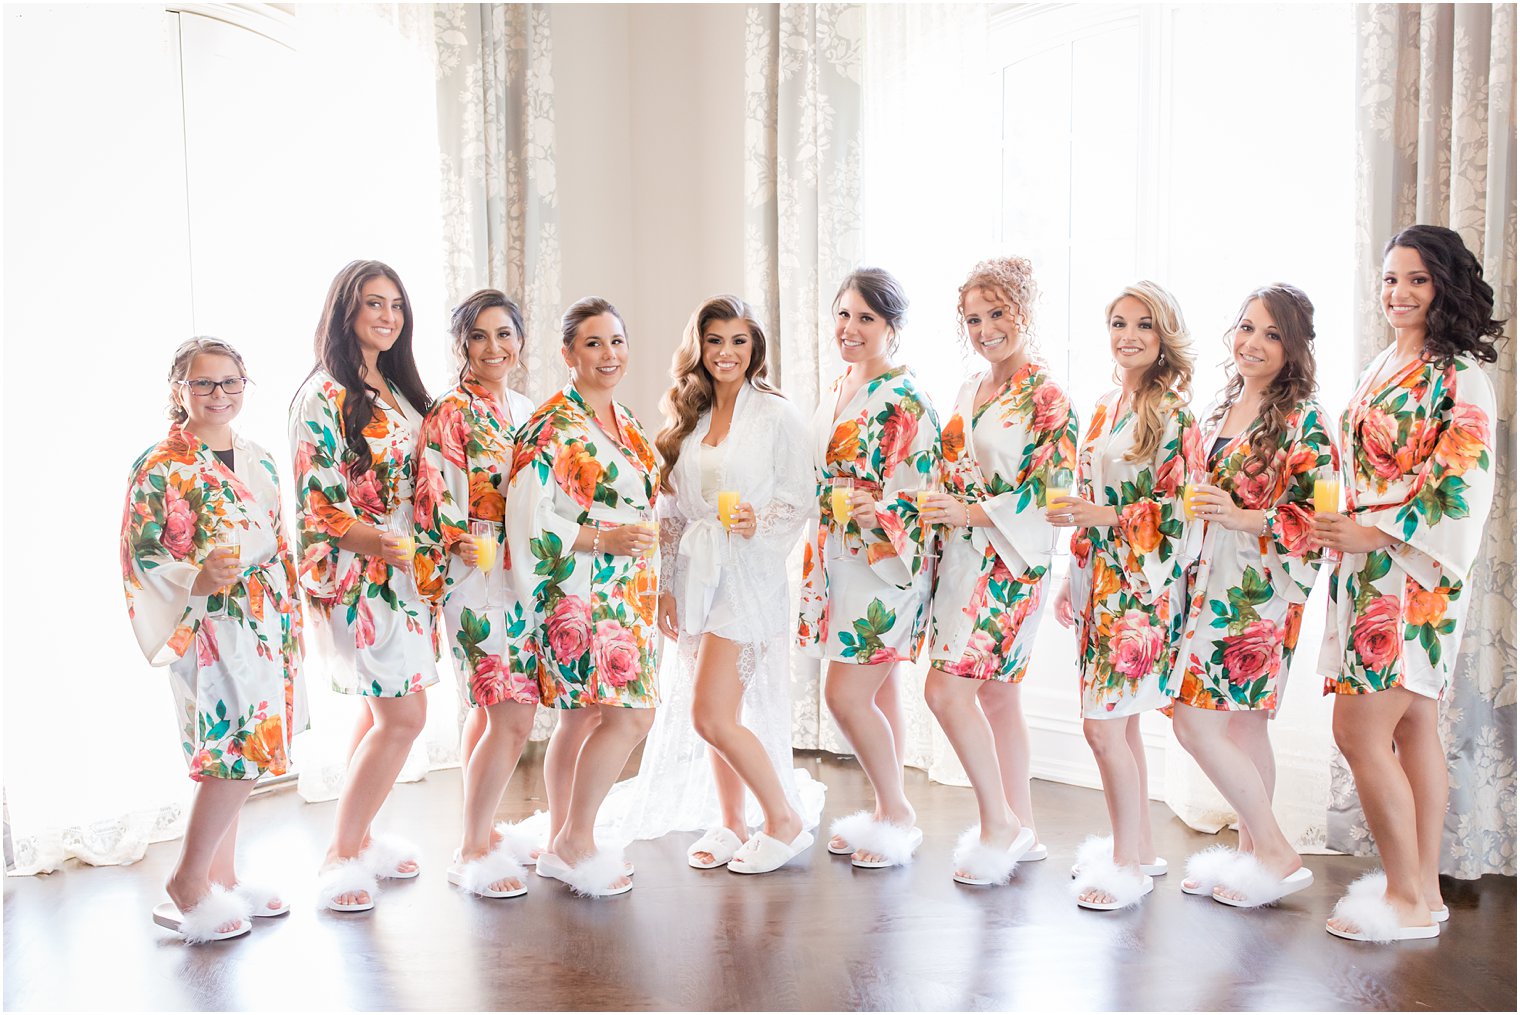 Bridesmaids wearing floral robes